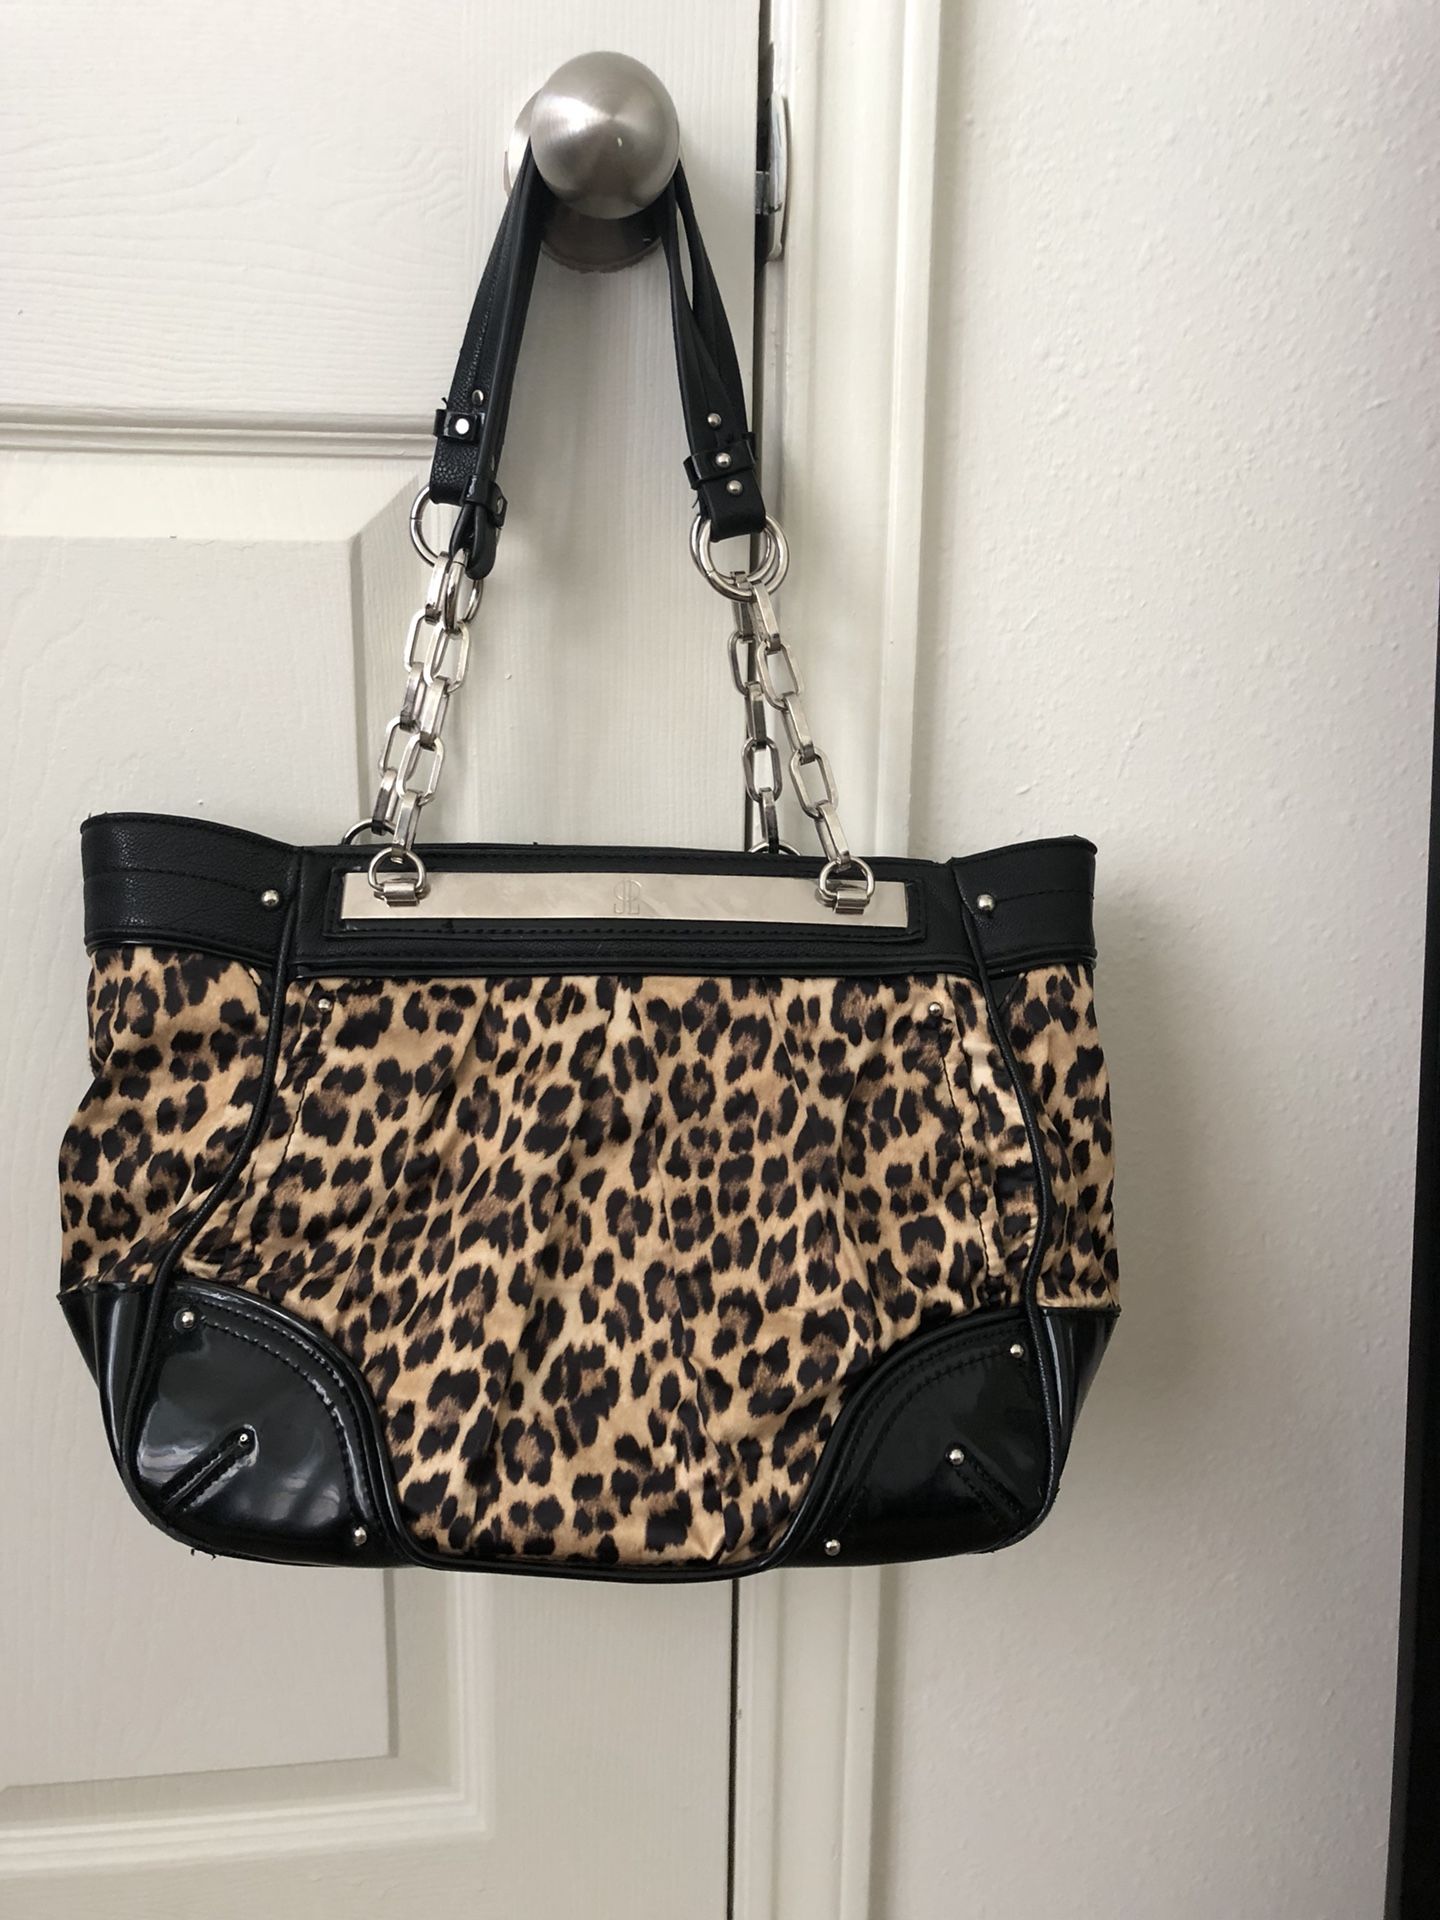 Cheetah handbag